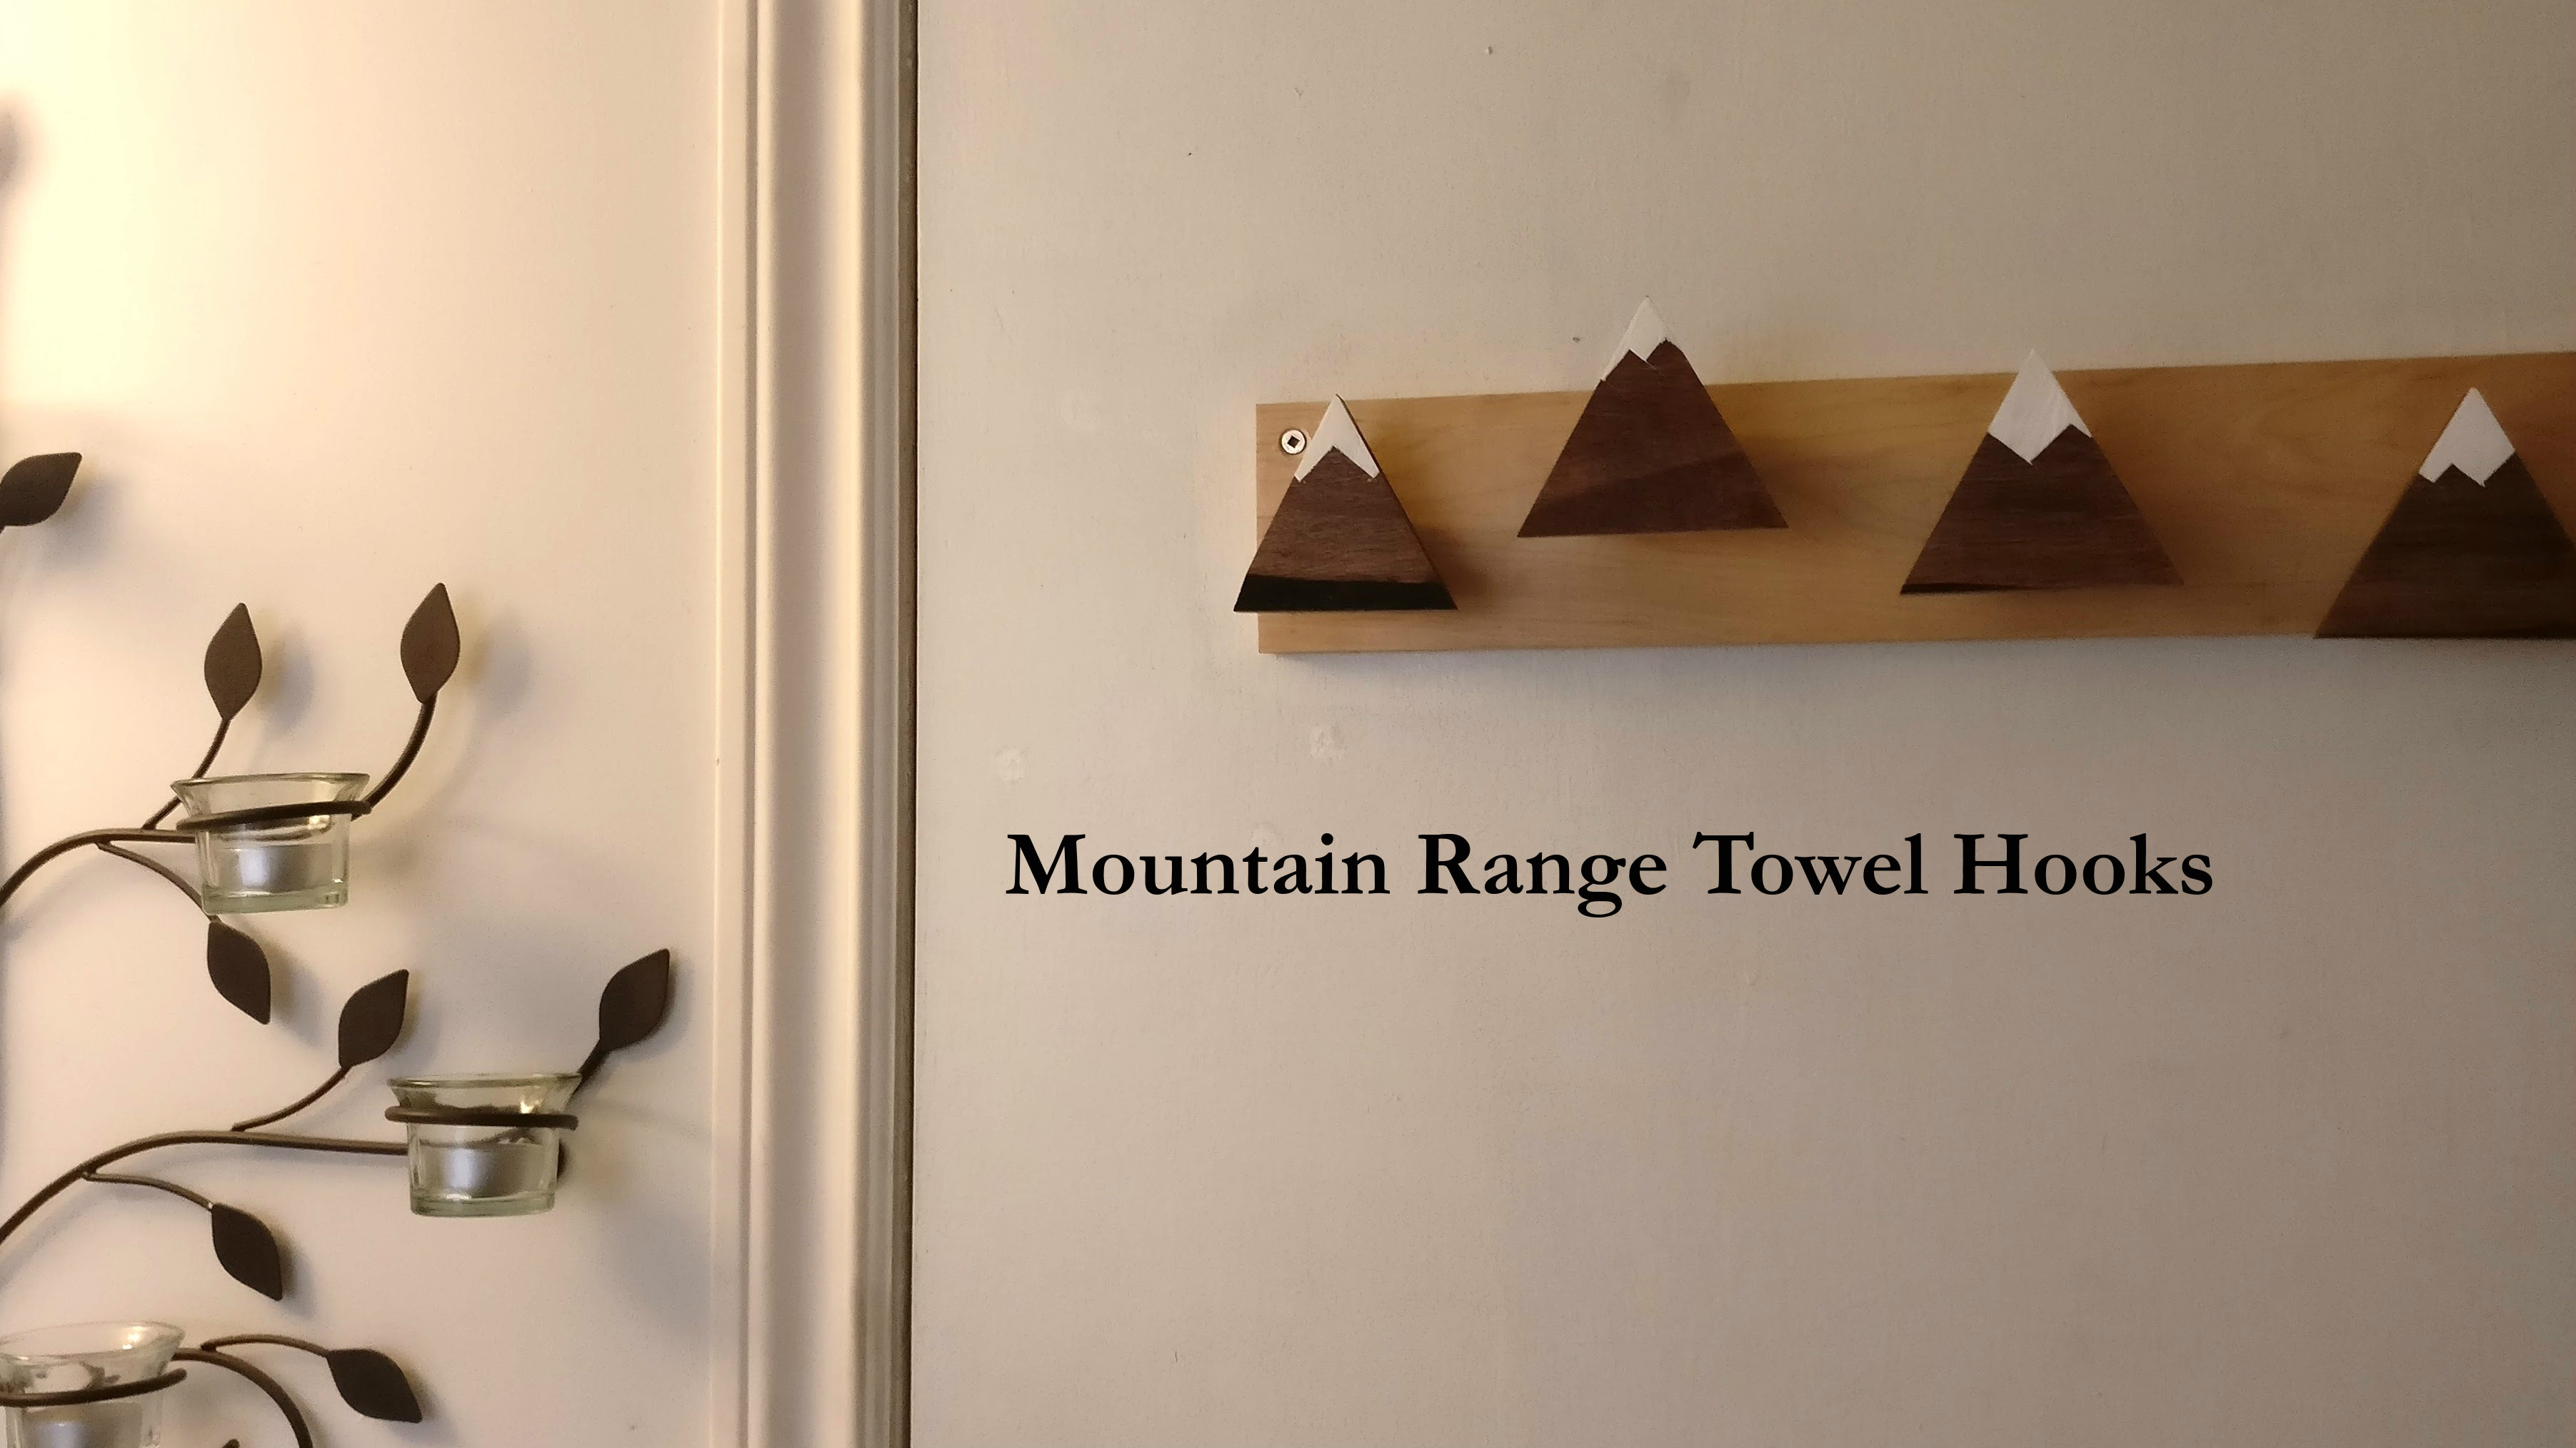 Mountain Range Towel Hooks Installed